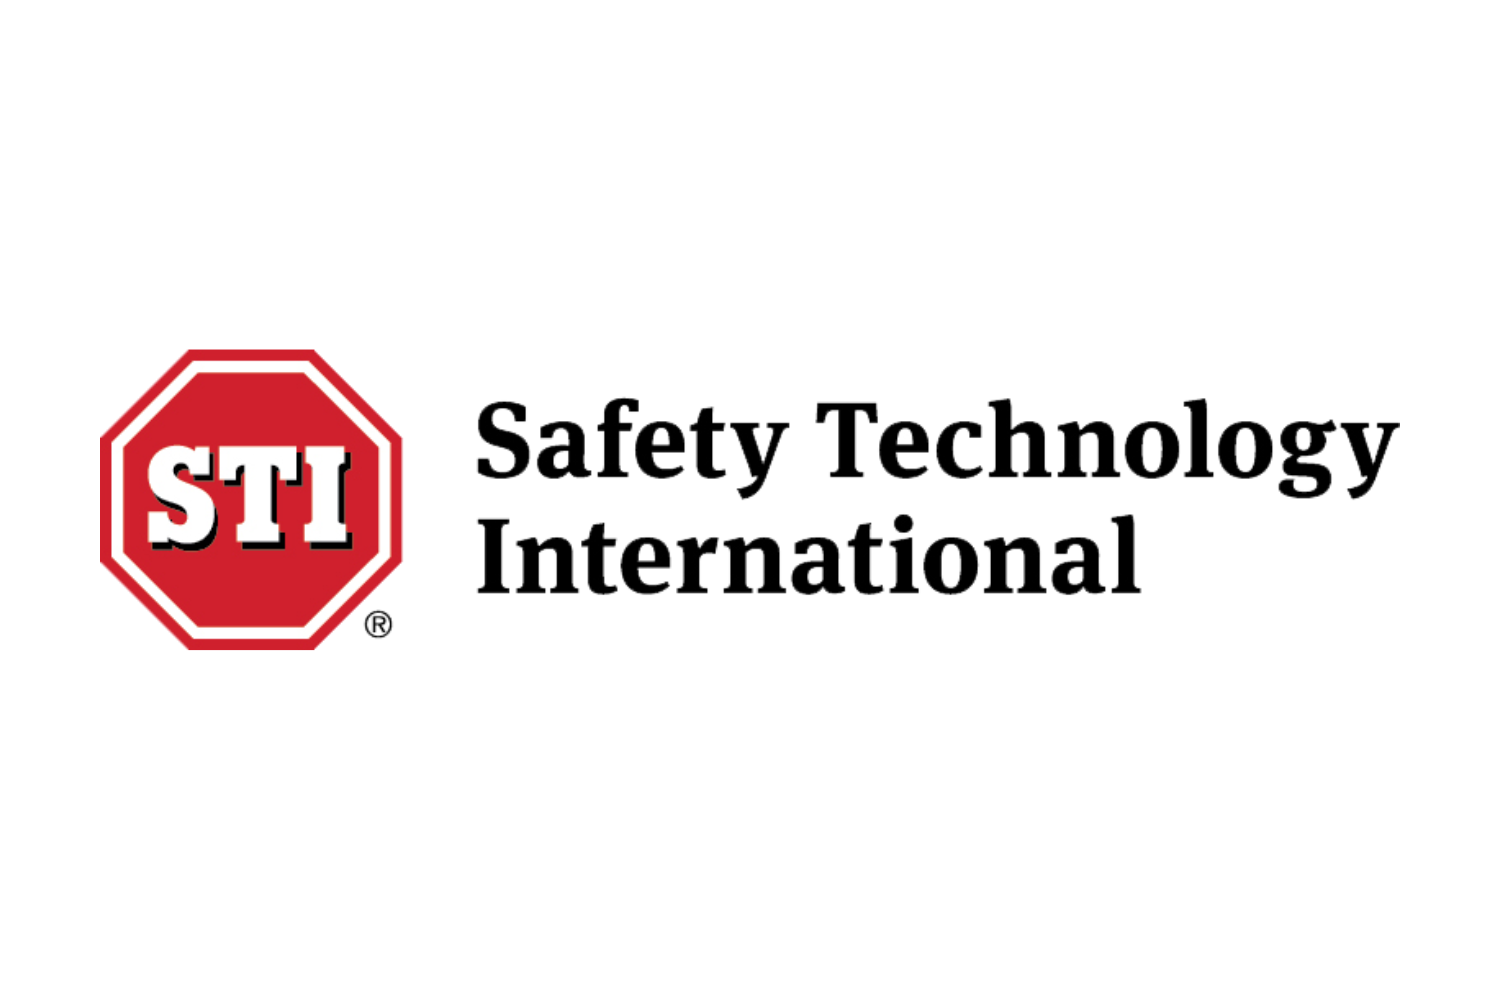 Safety Technology International Limited